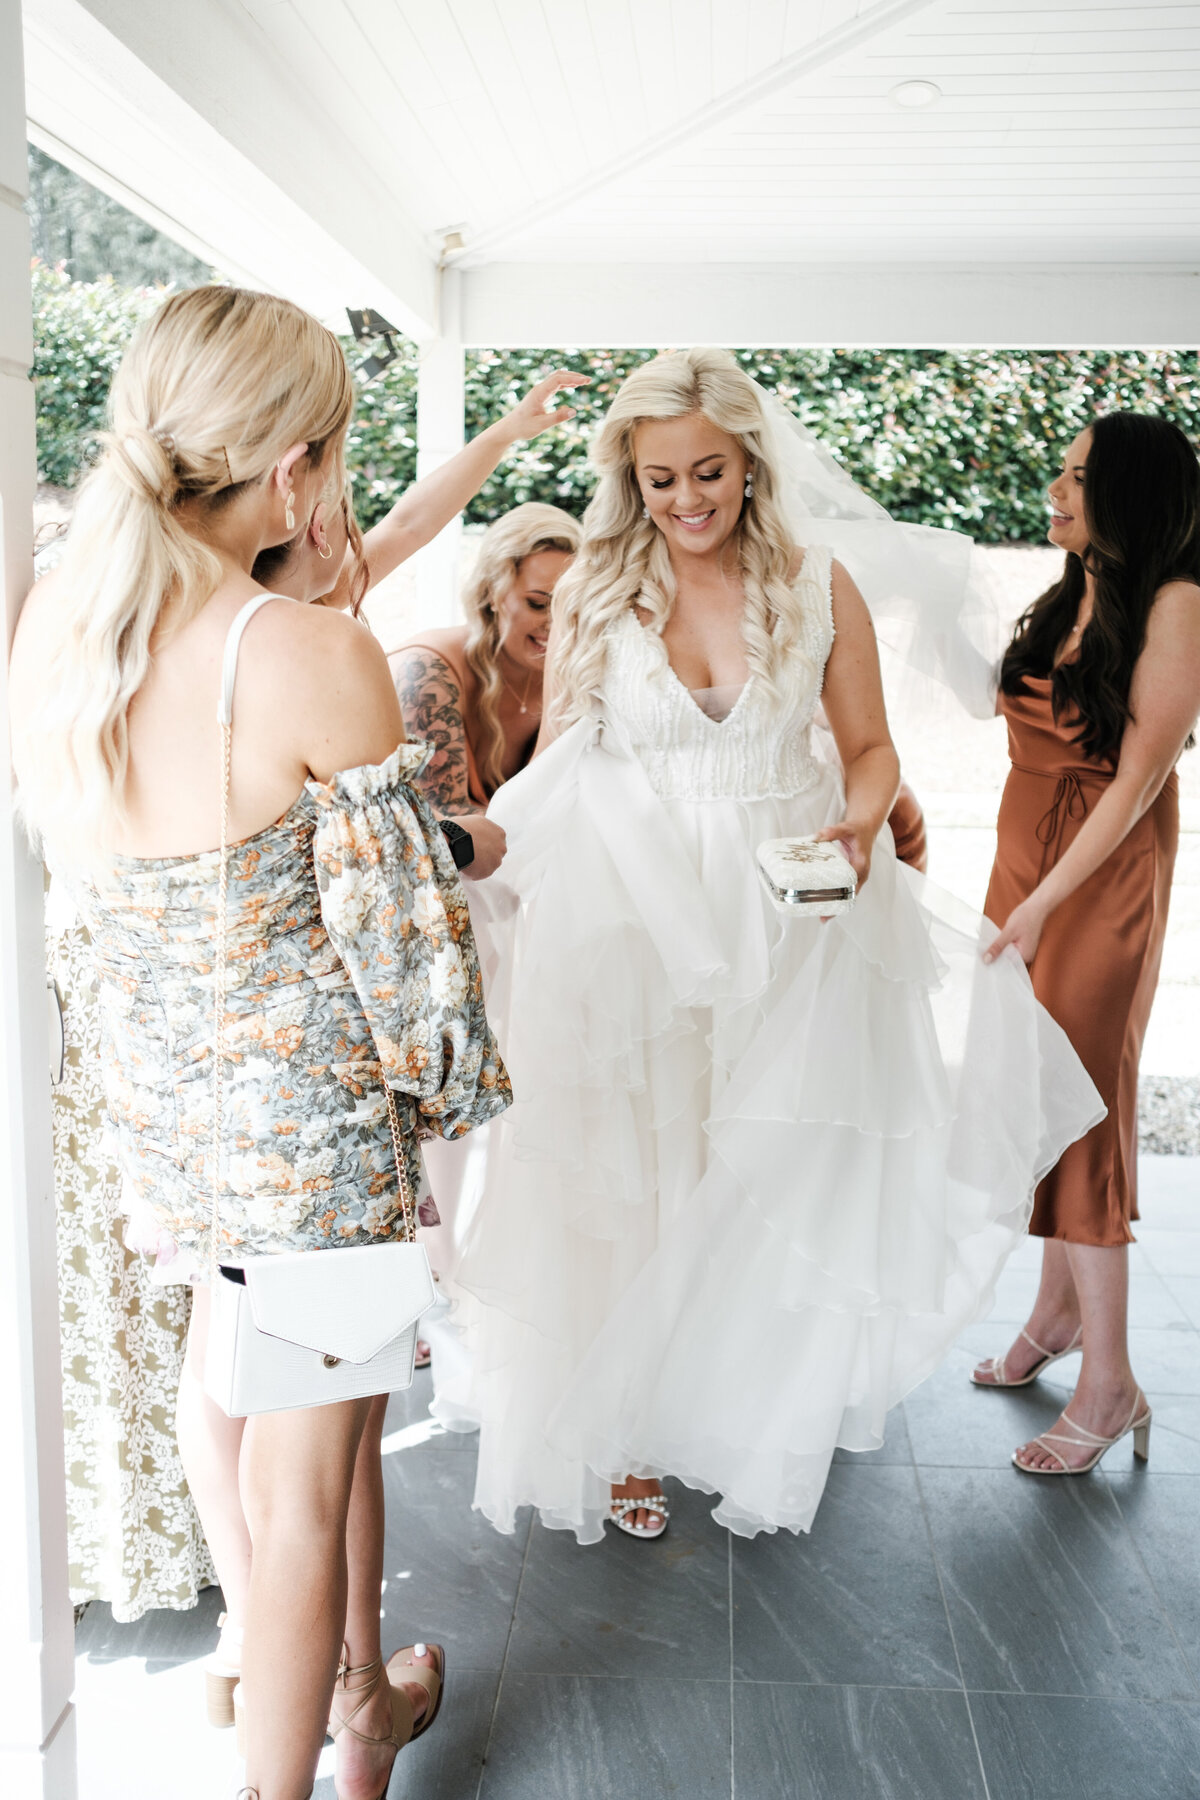 Abigail_Steven_Wedding_Images_Roam Ahead Weddings - 186